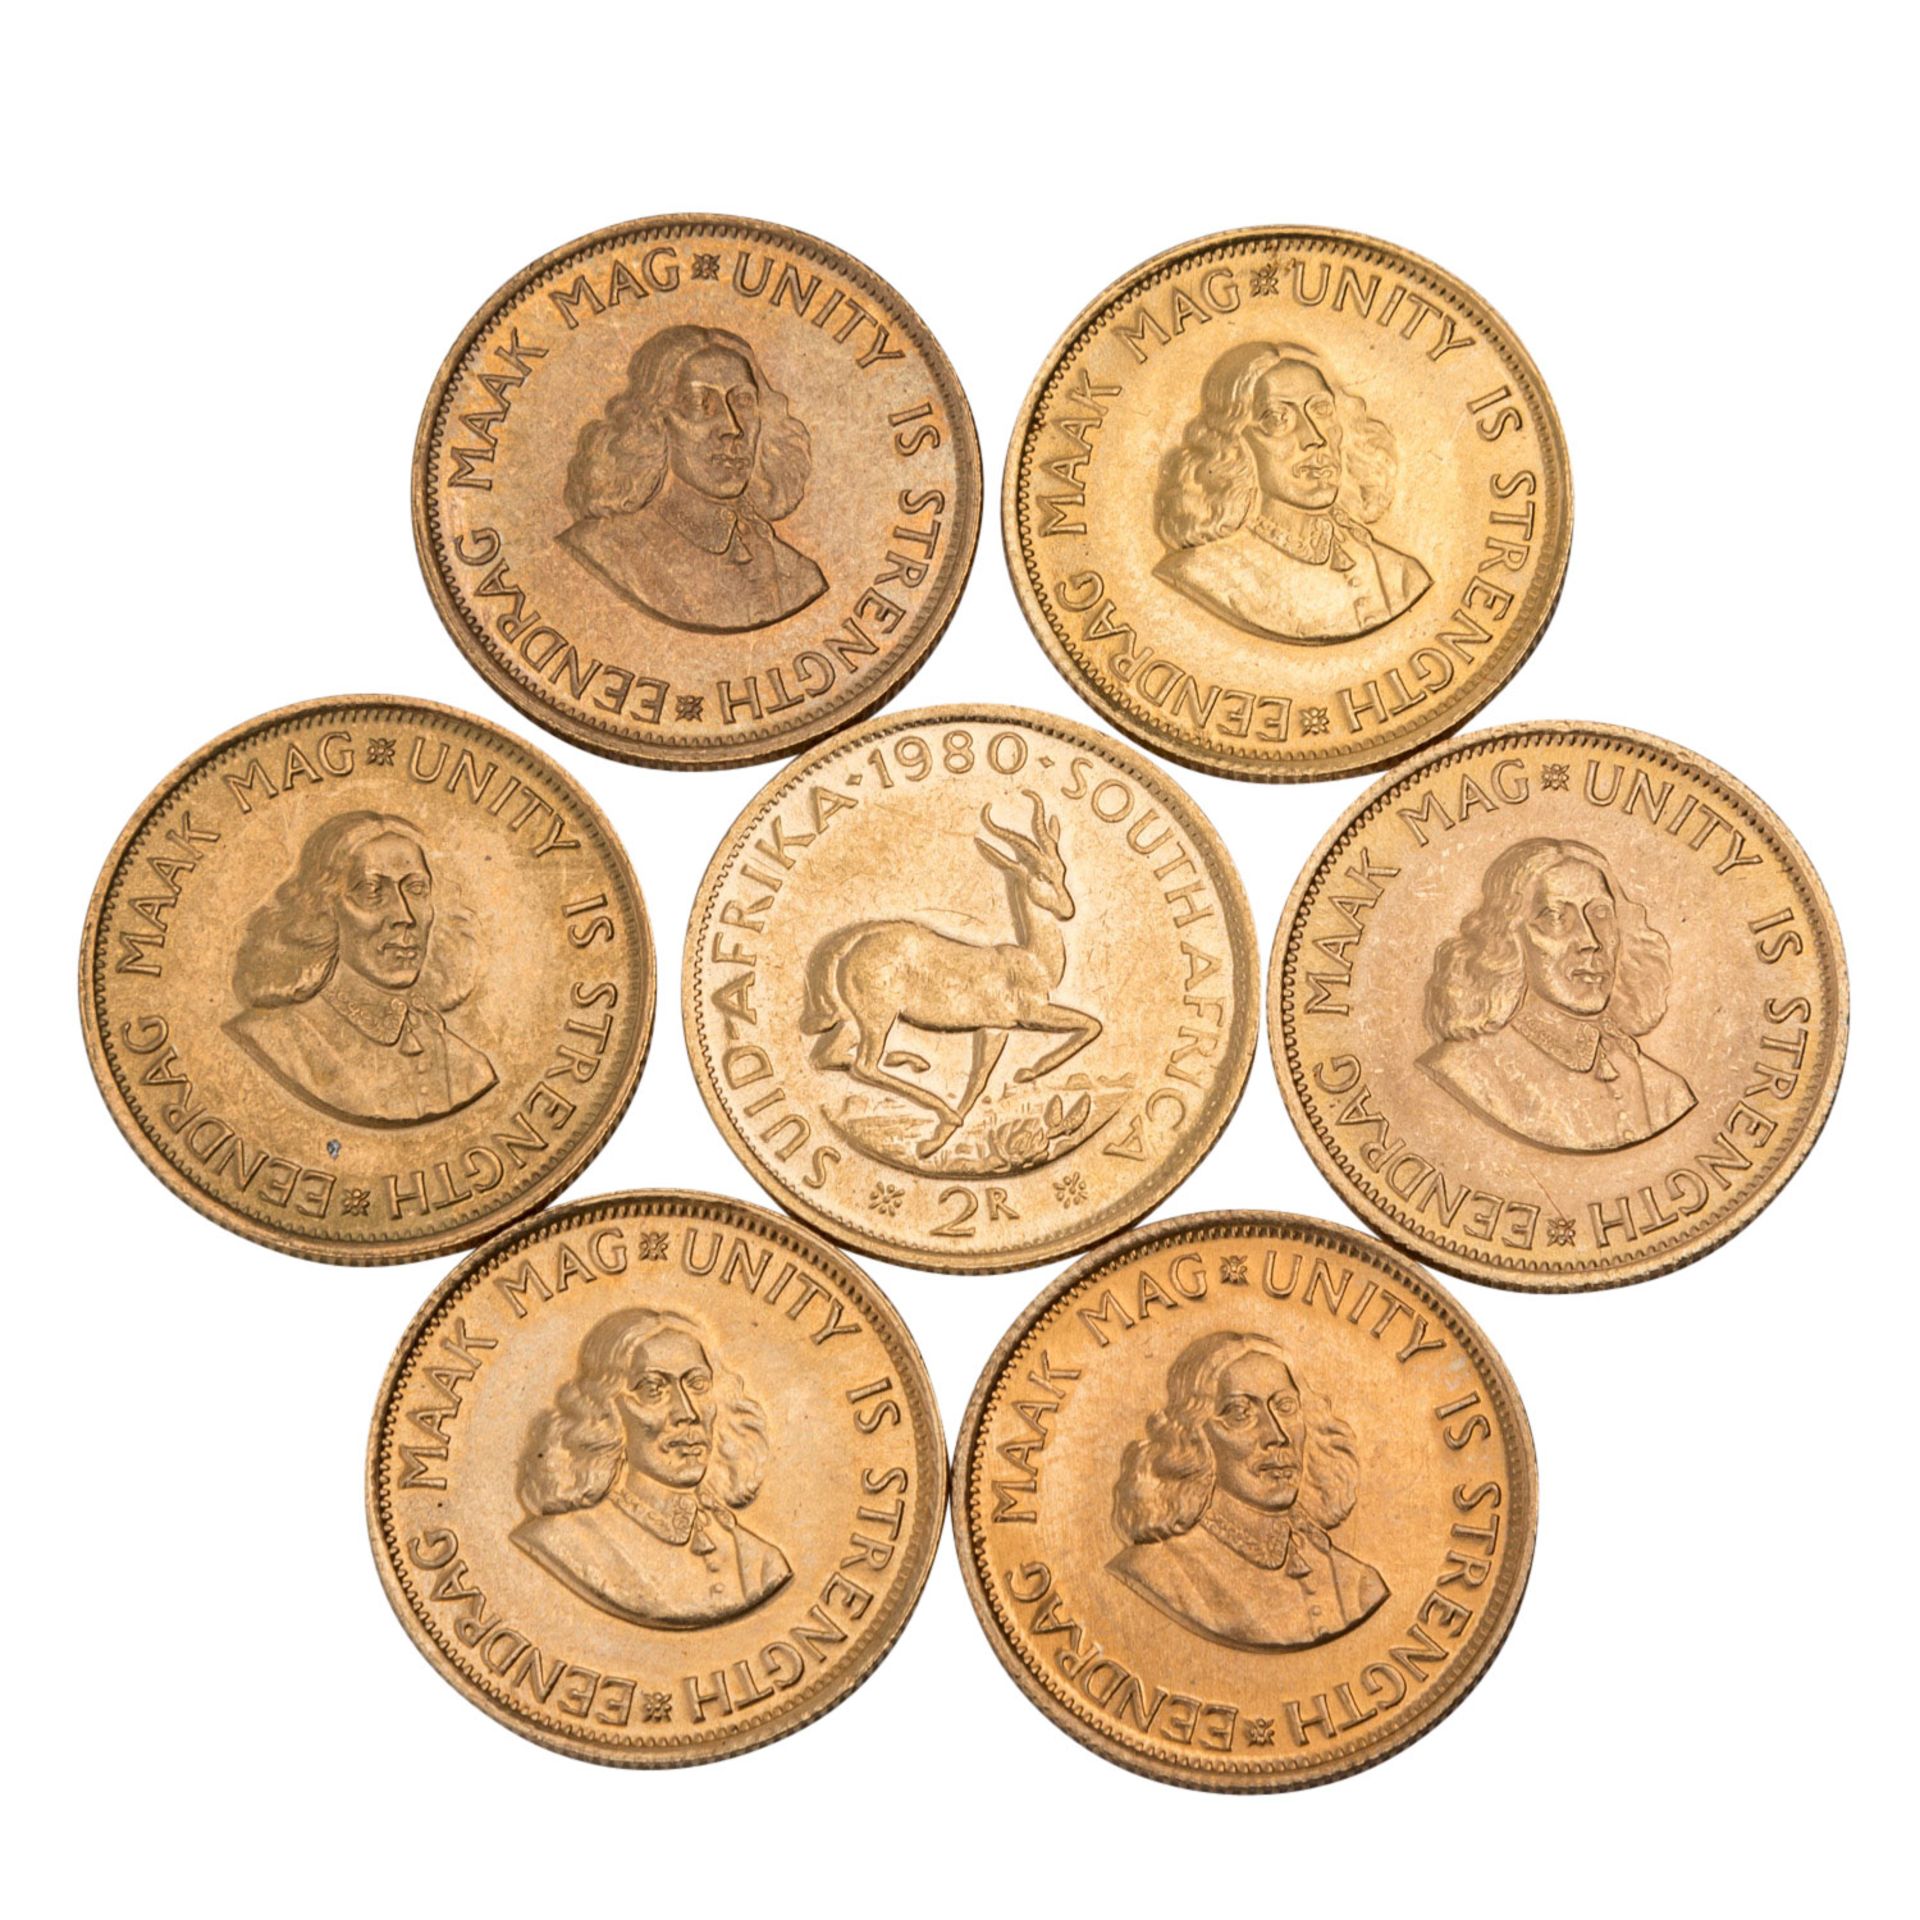 Südafrika / GOLD - 70 x 2 Rand, verschiedene Jahrgänge, Motiv Springbock, - Image 2 of 2